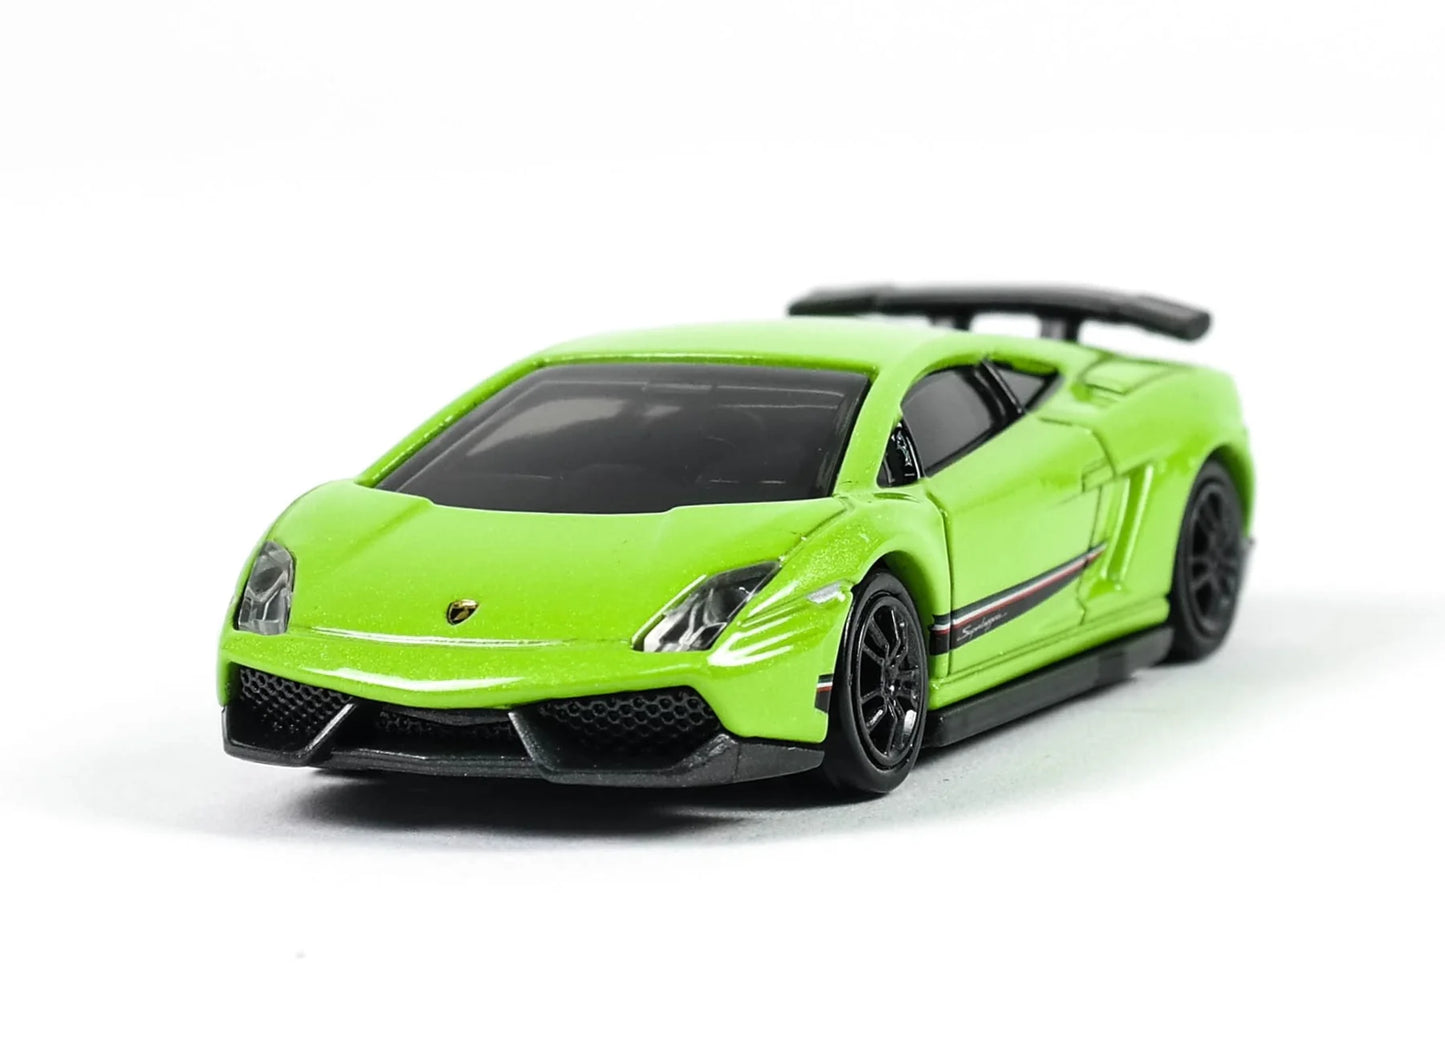 Tomica Premium No.33 Lamborghini Gallardo Superleggera (Green)